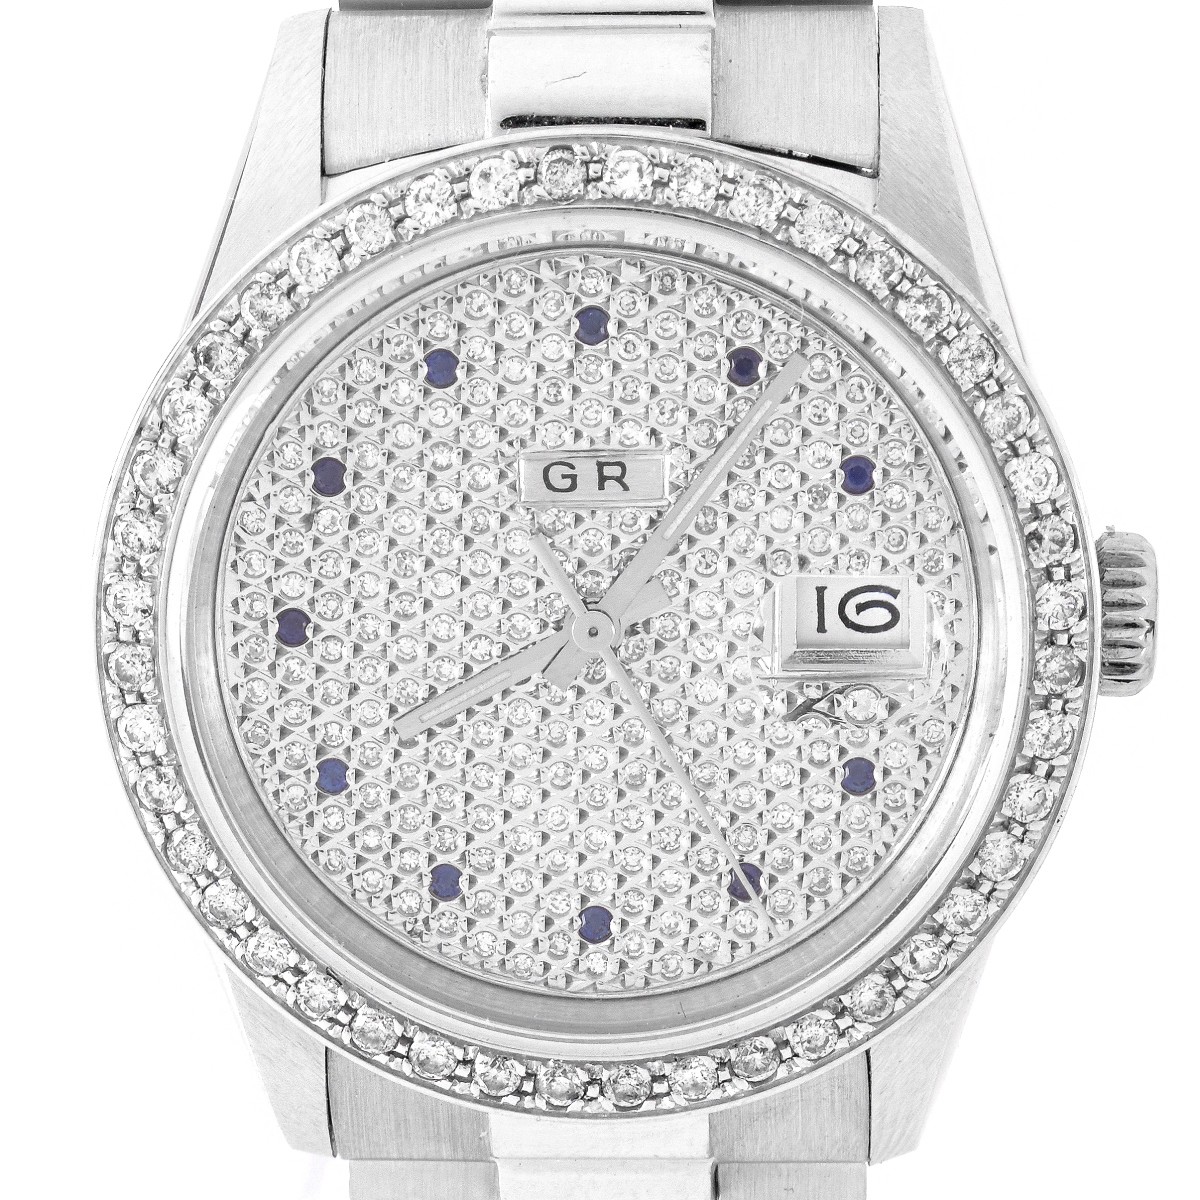 Man's GR Diamond and 18K Watch